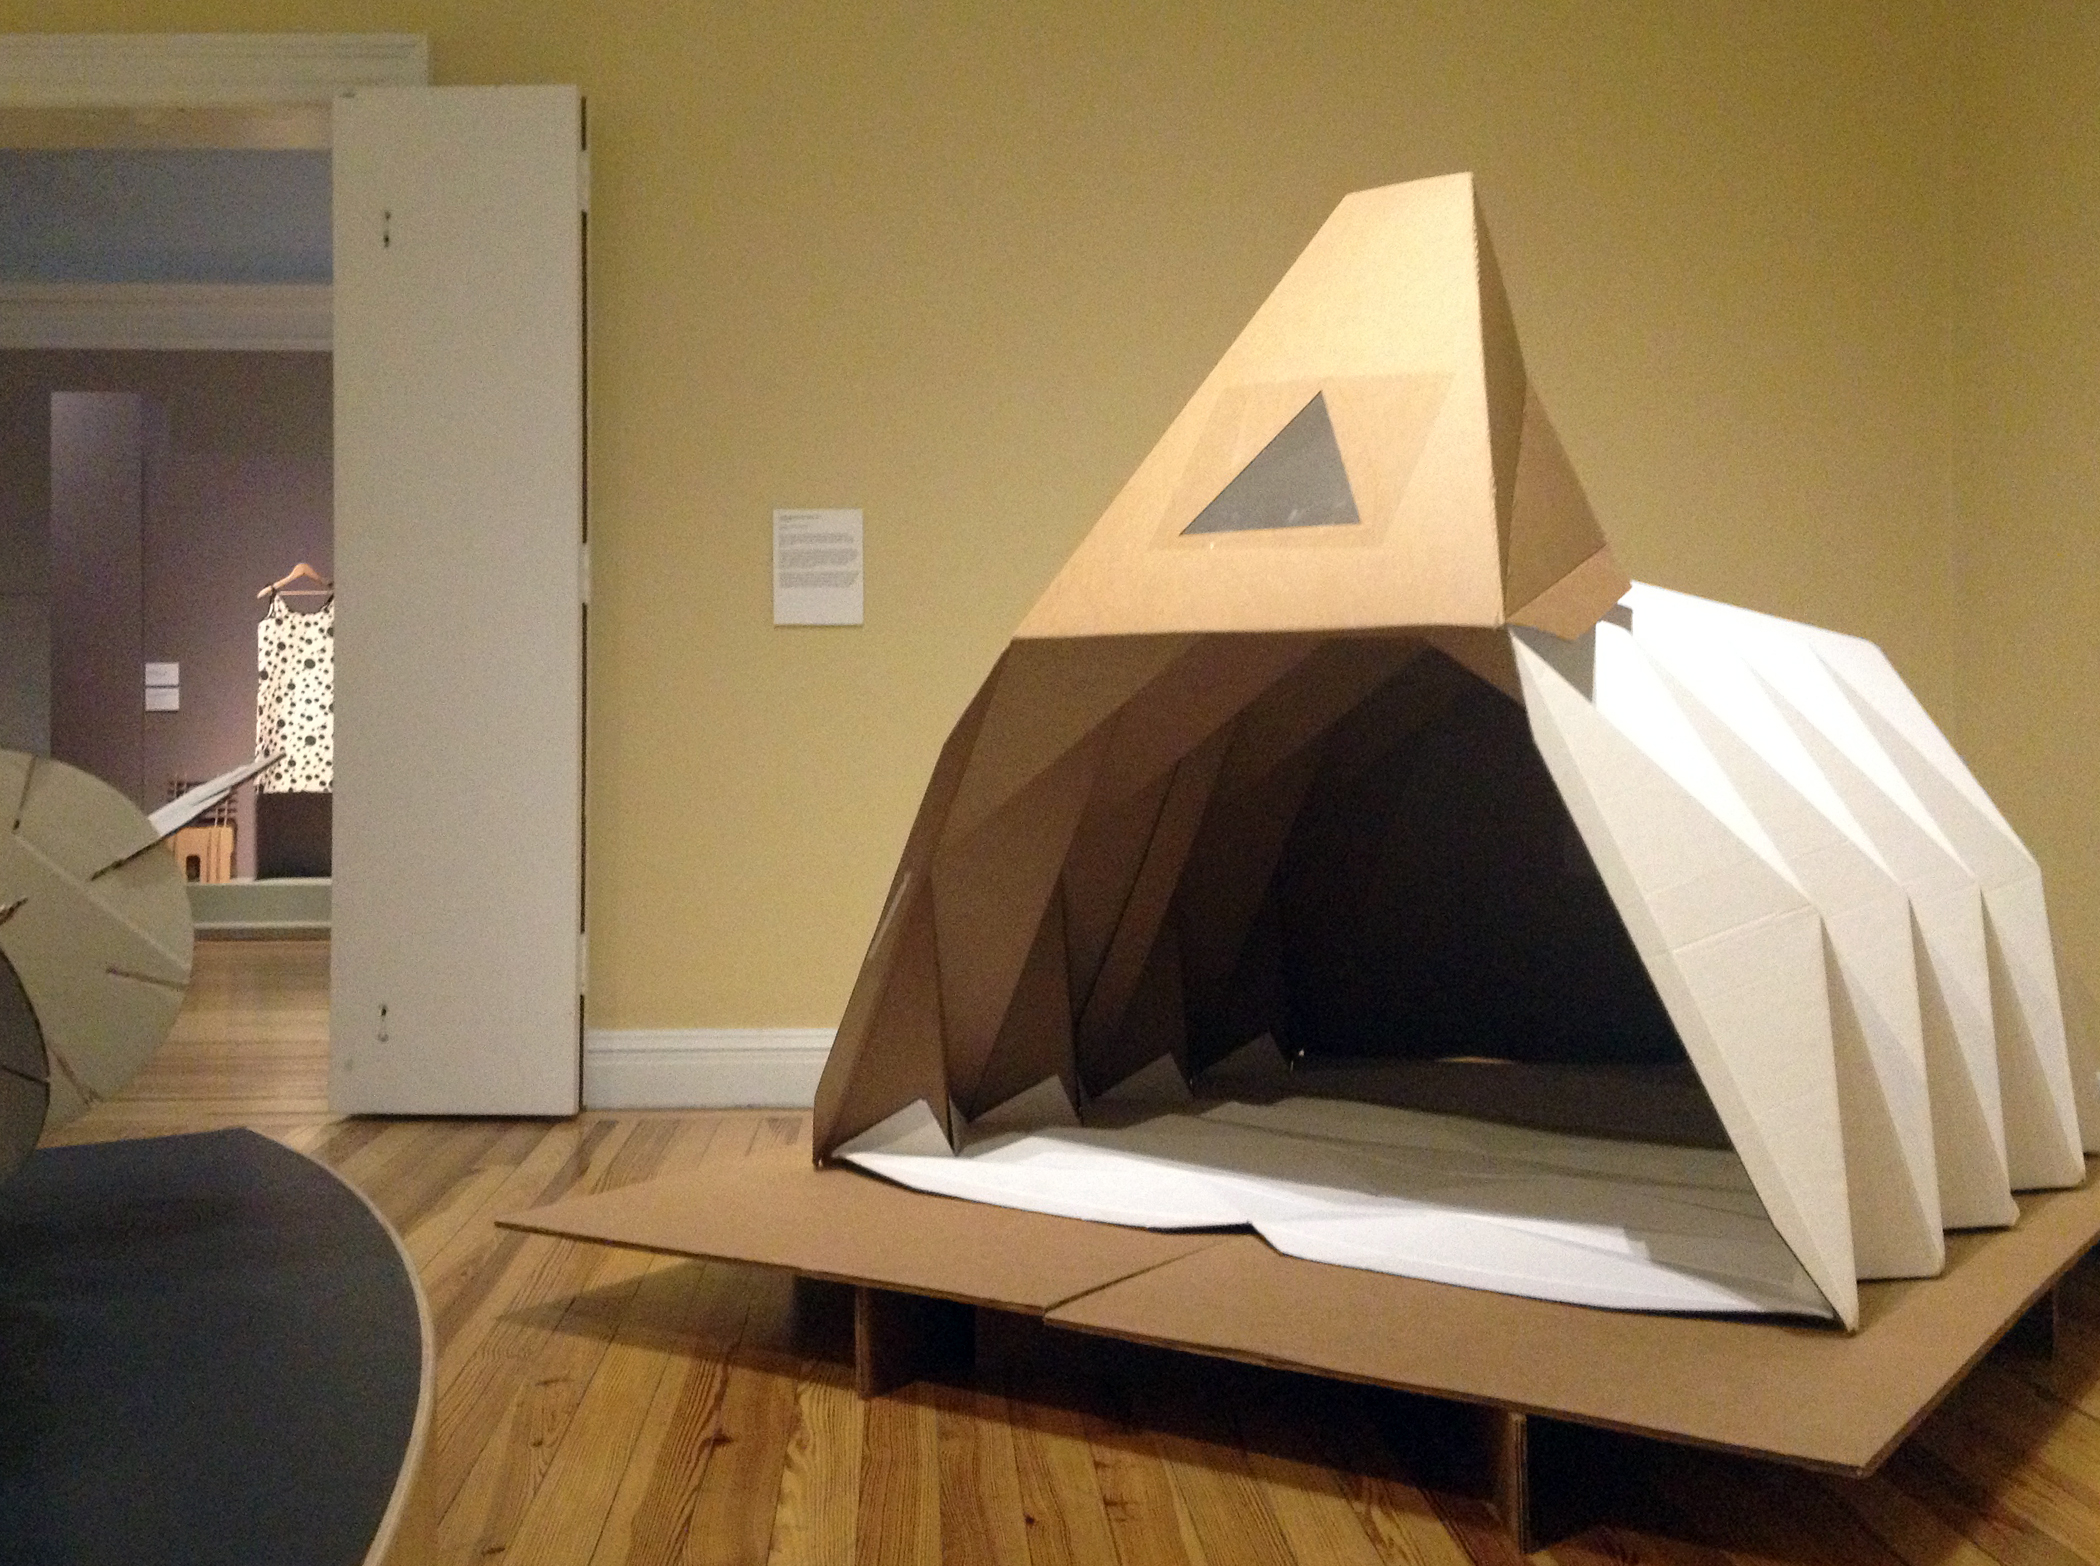 Cardborigami, Callison Architect Tina Hovsepian's Cardboard Shelter, at the Berkshire Museum.